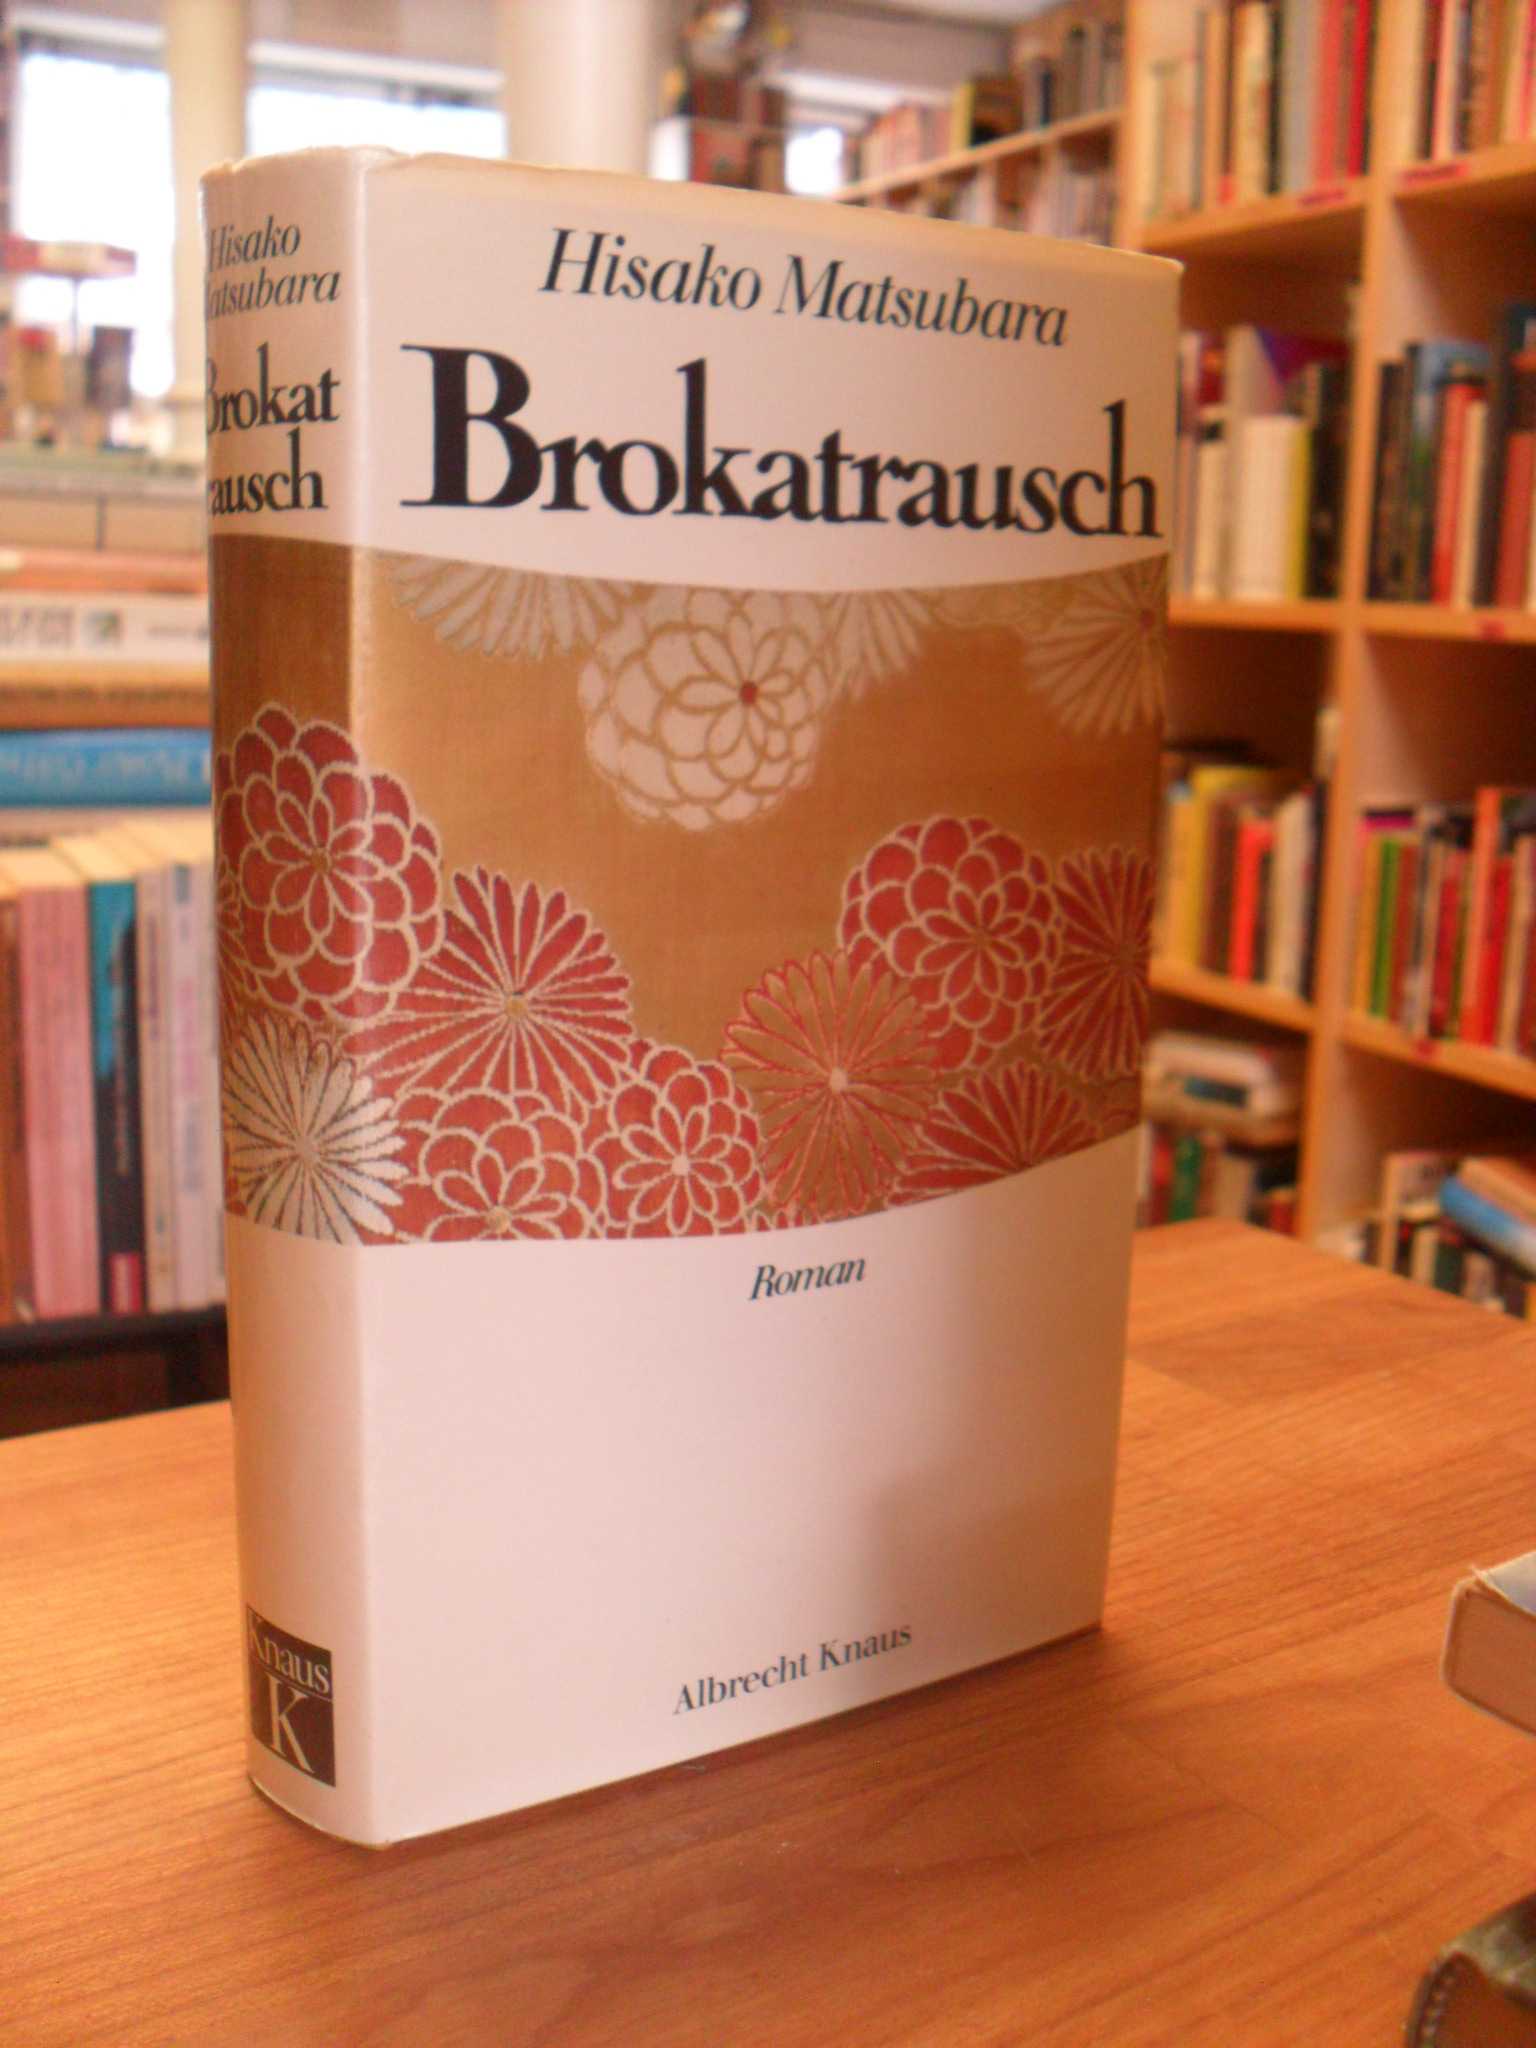 Matsubara, Brokatrausch,